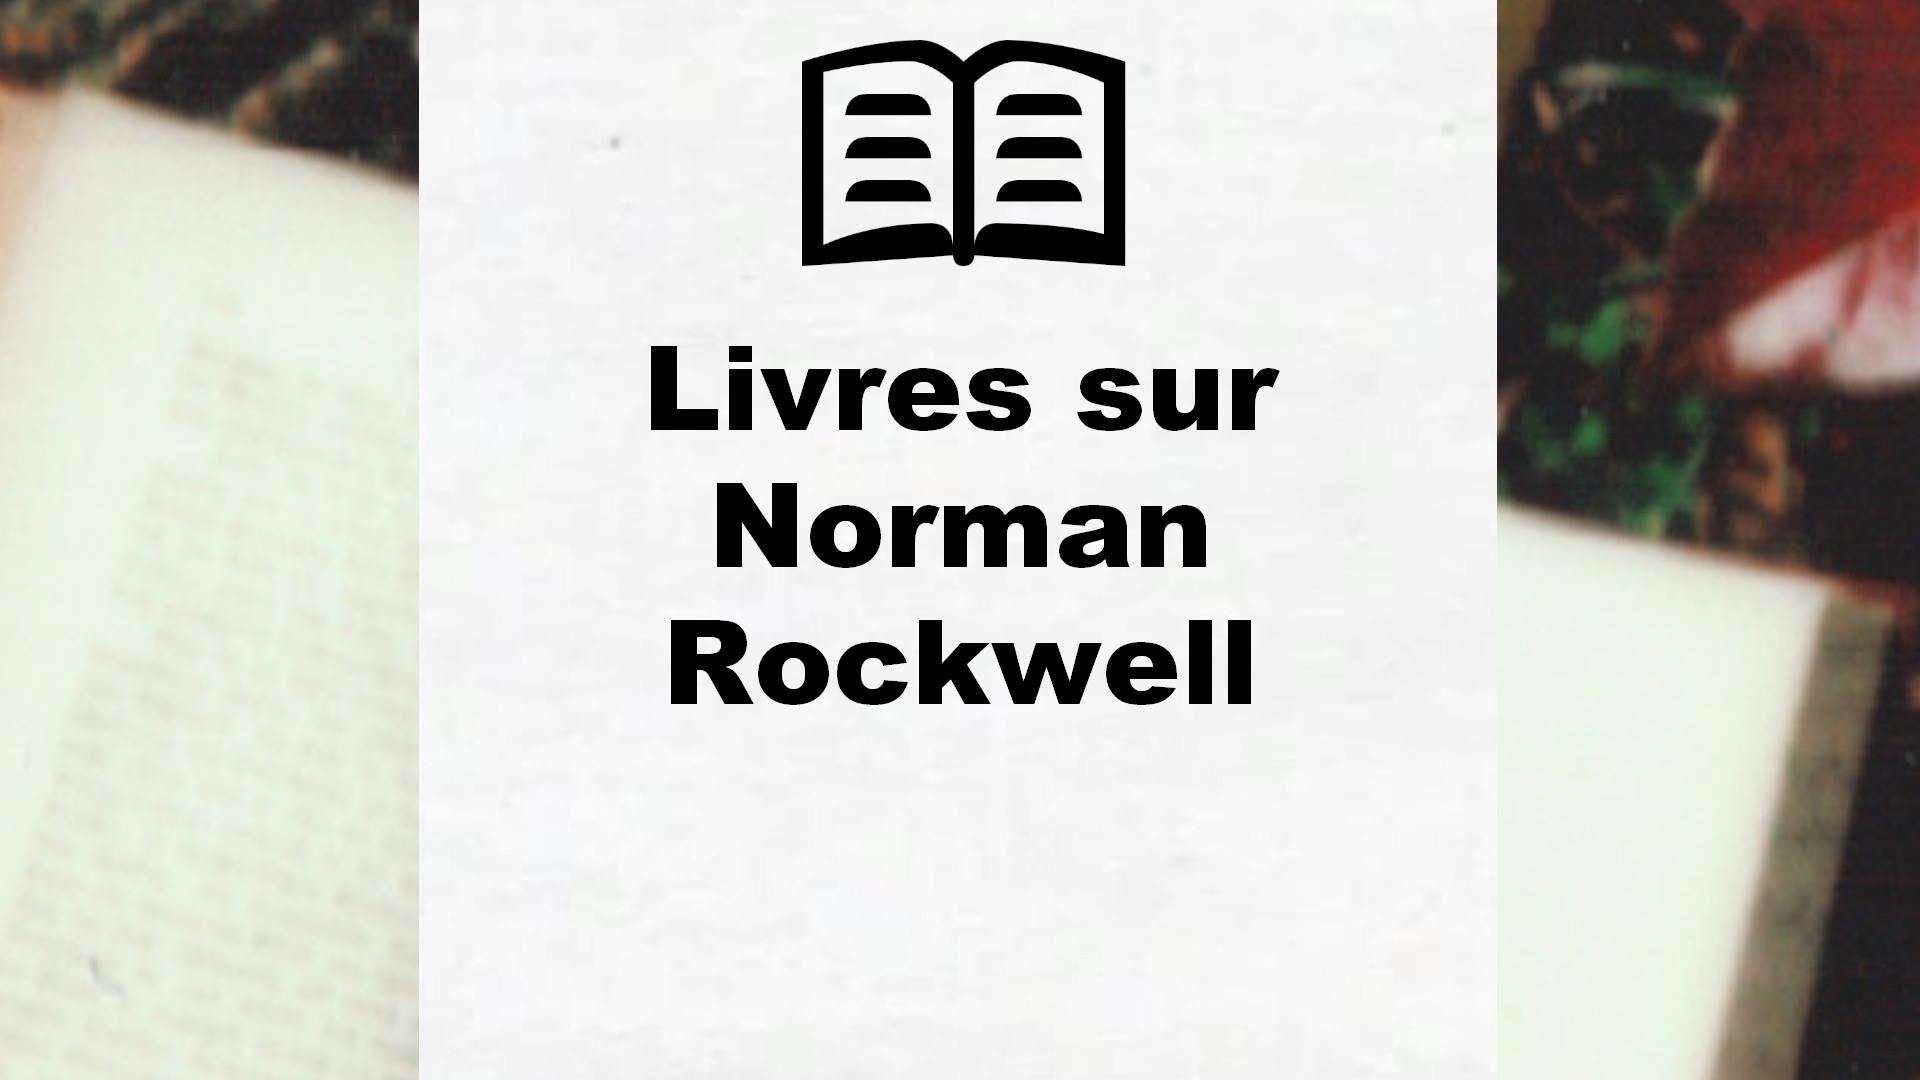 Livres sur Norman Rockwell